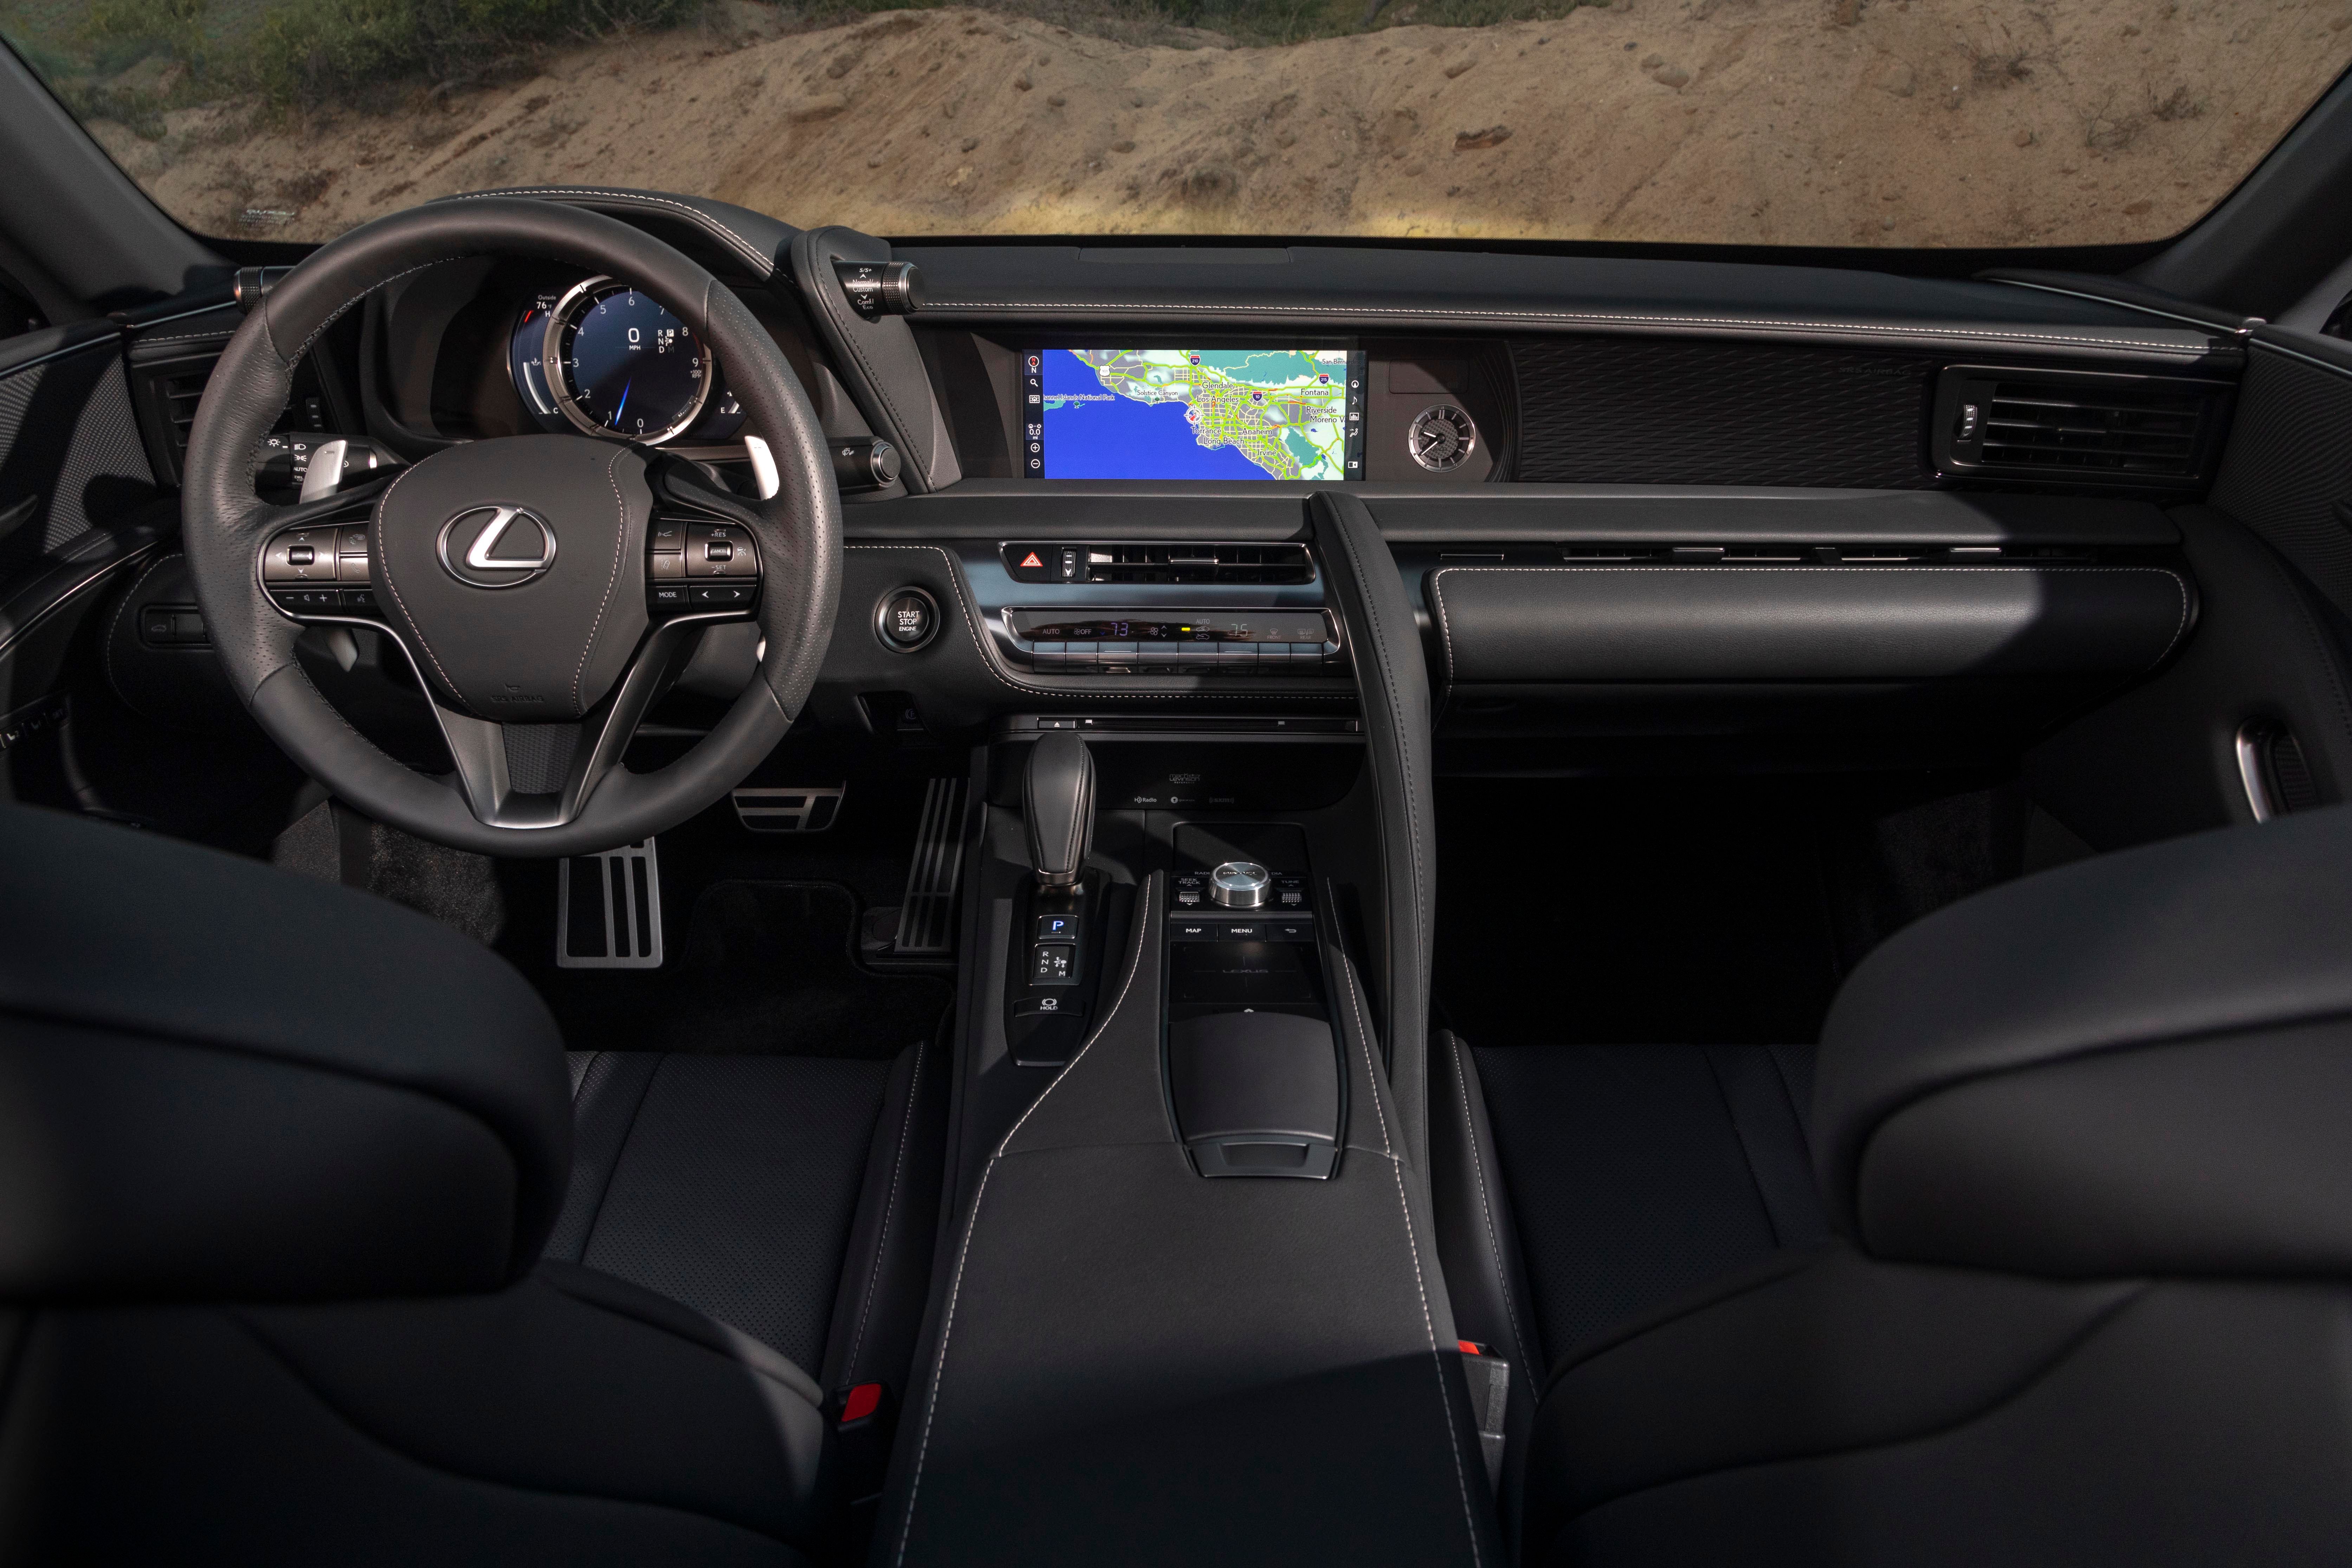 2022 Lexus LC 500 Convertible 